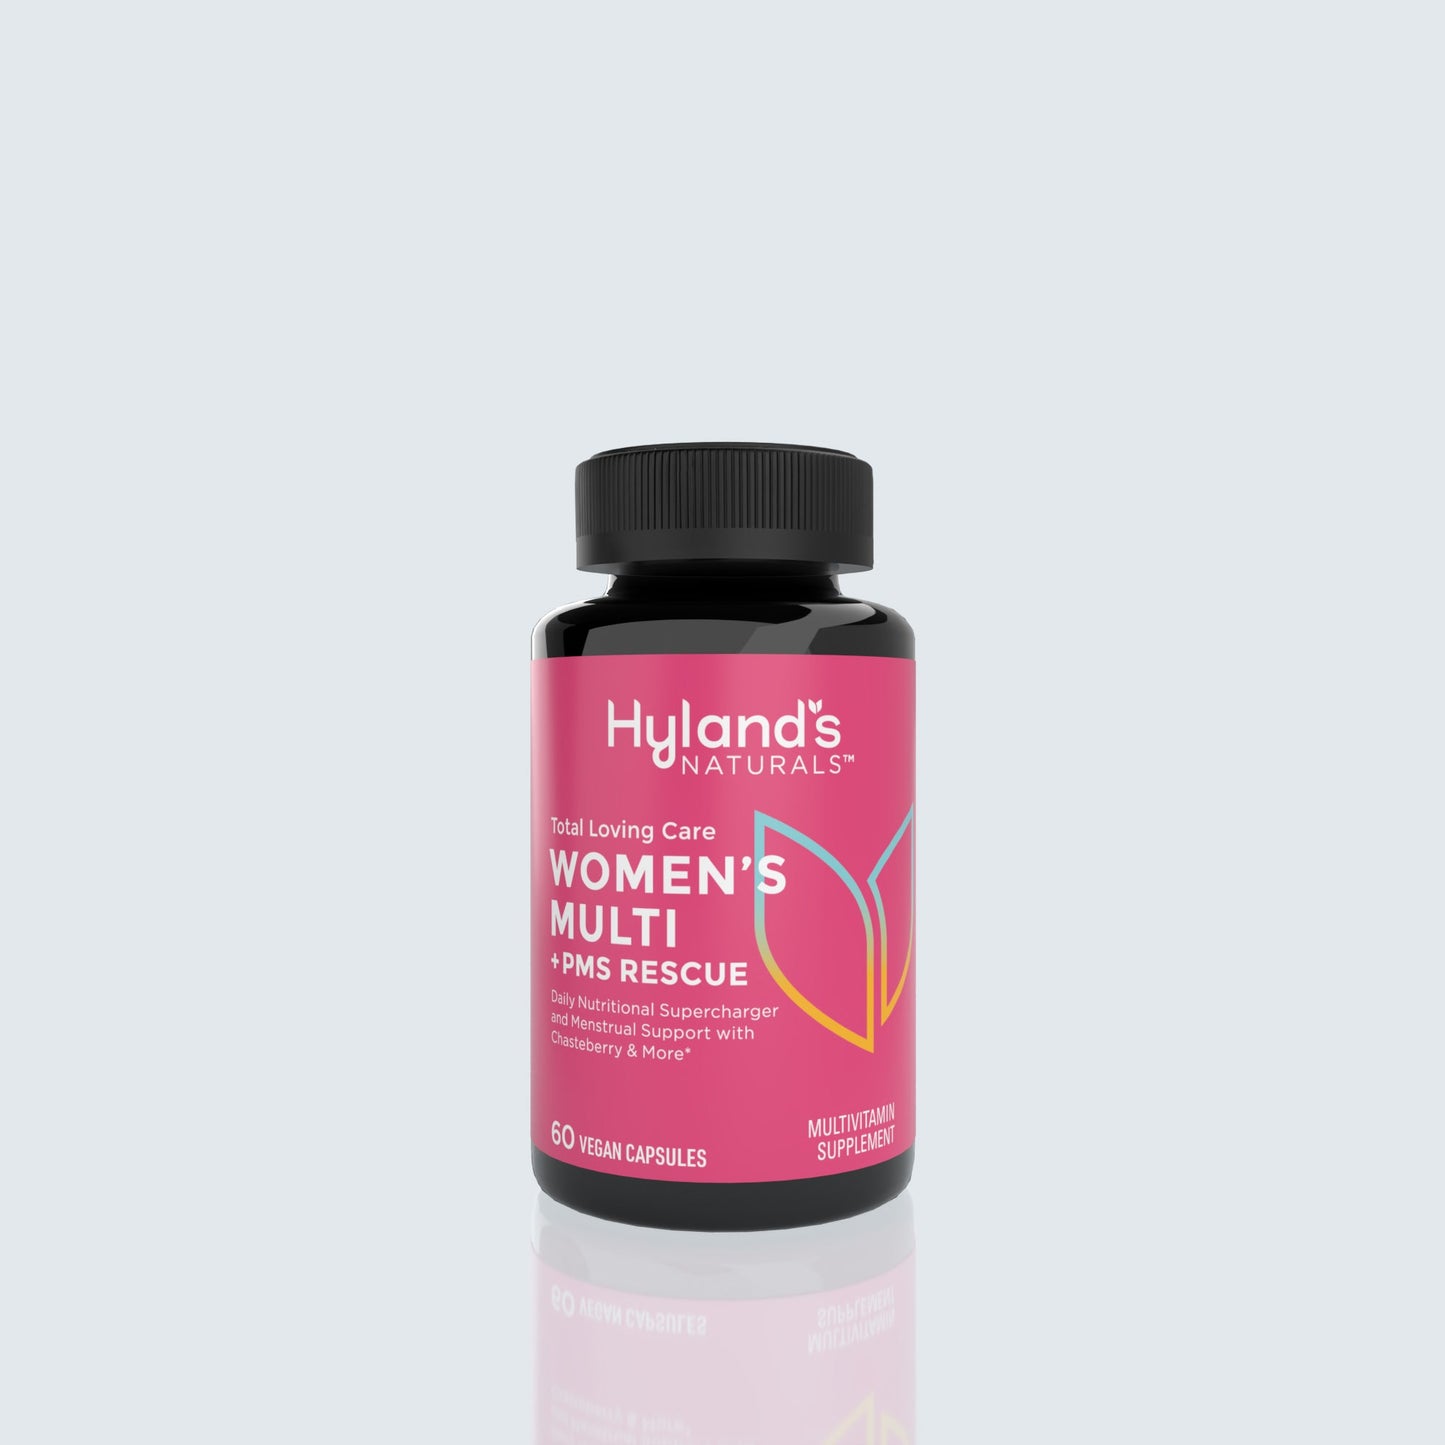 Hyland’s Naturals Women's Multi + PMS Rescue